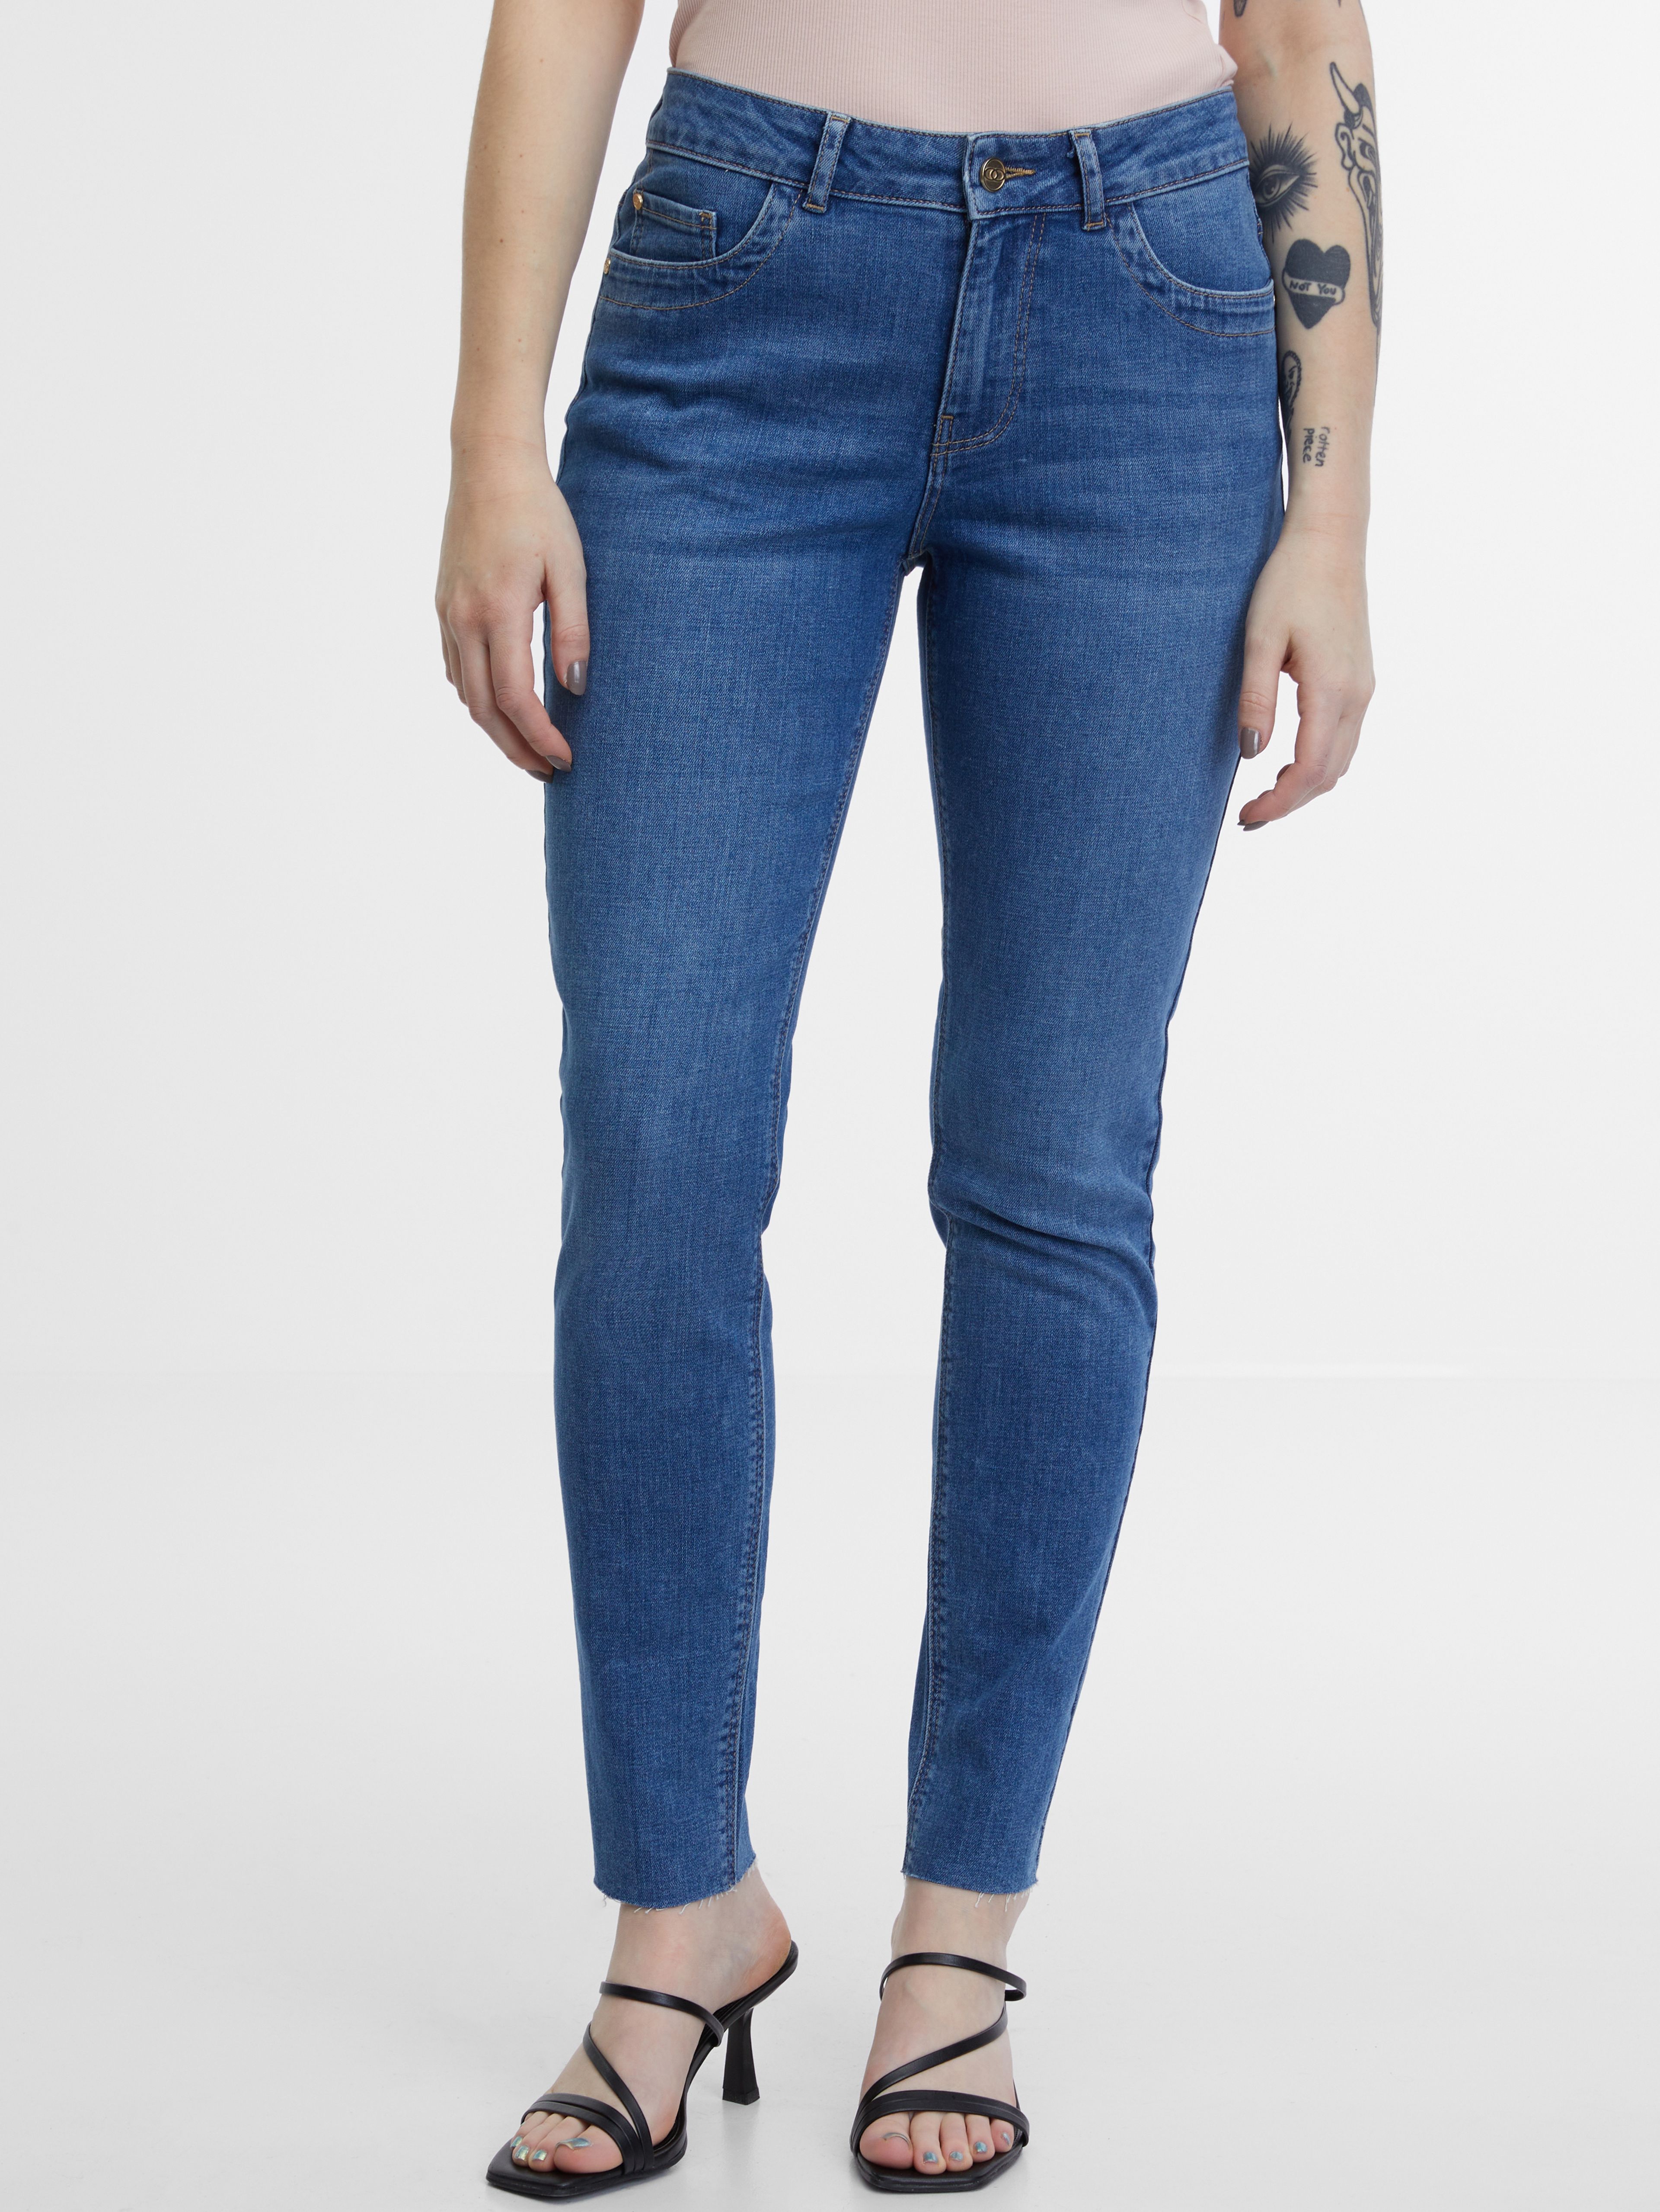 Niebieskie jeansy damskie skinny fit ORSAY